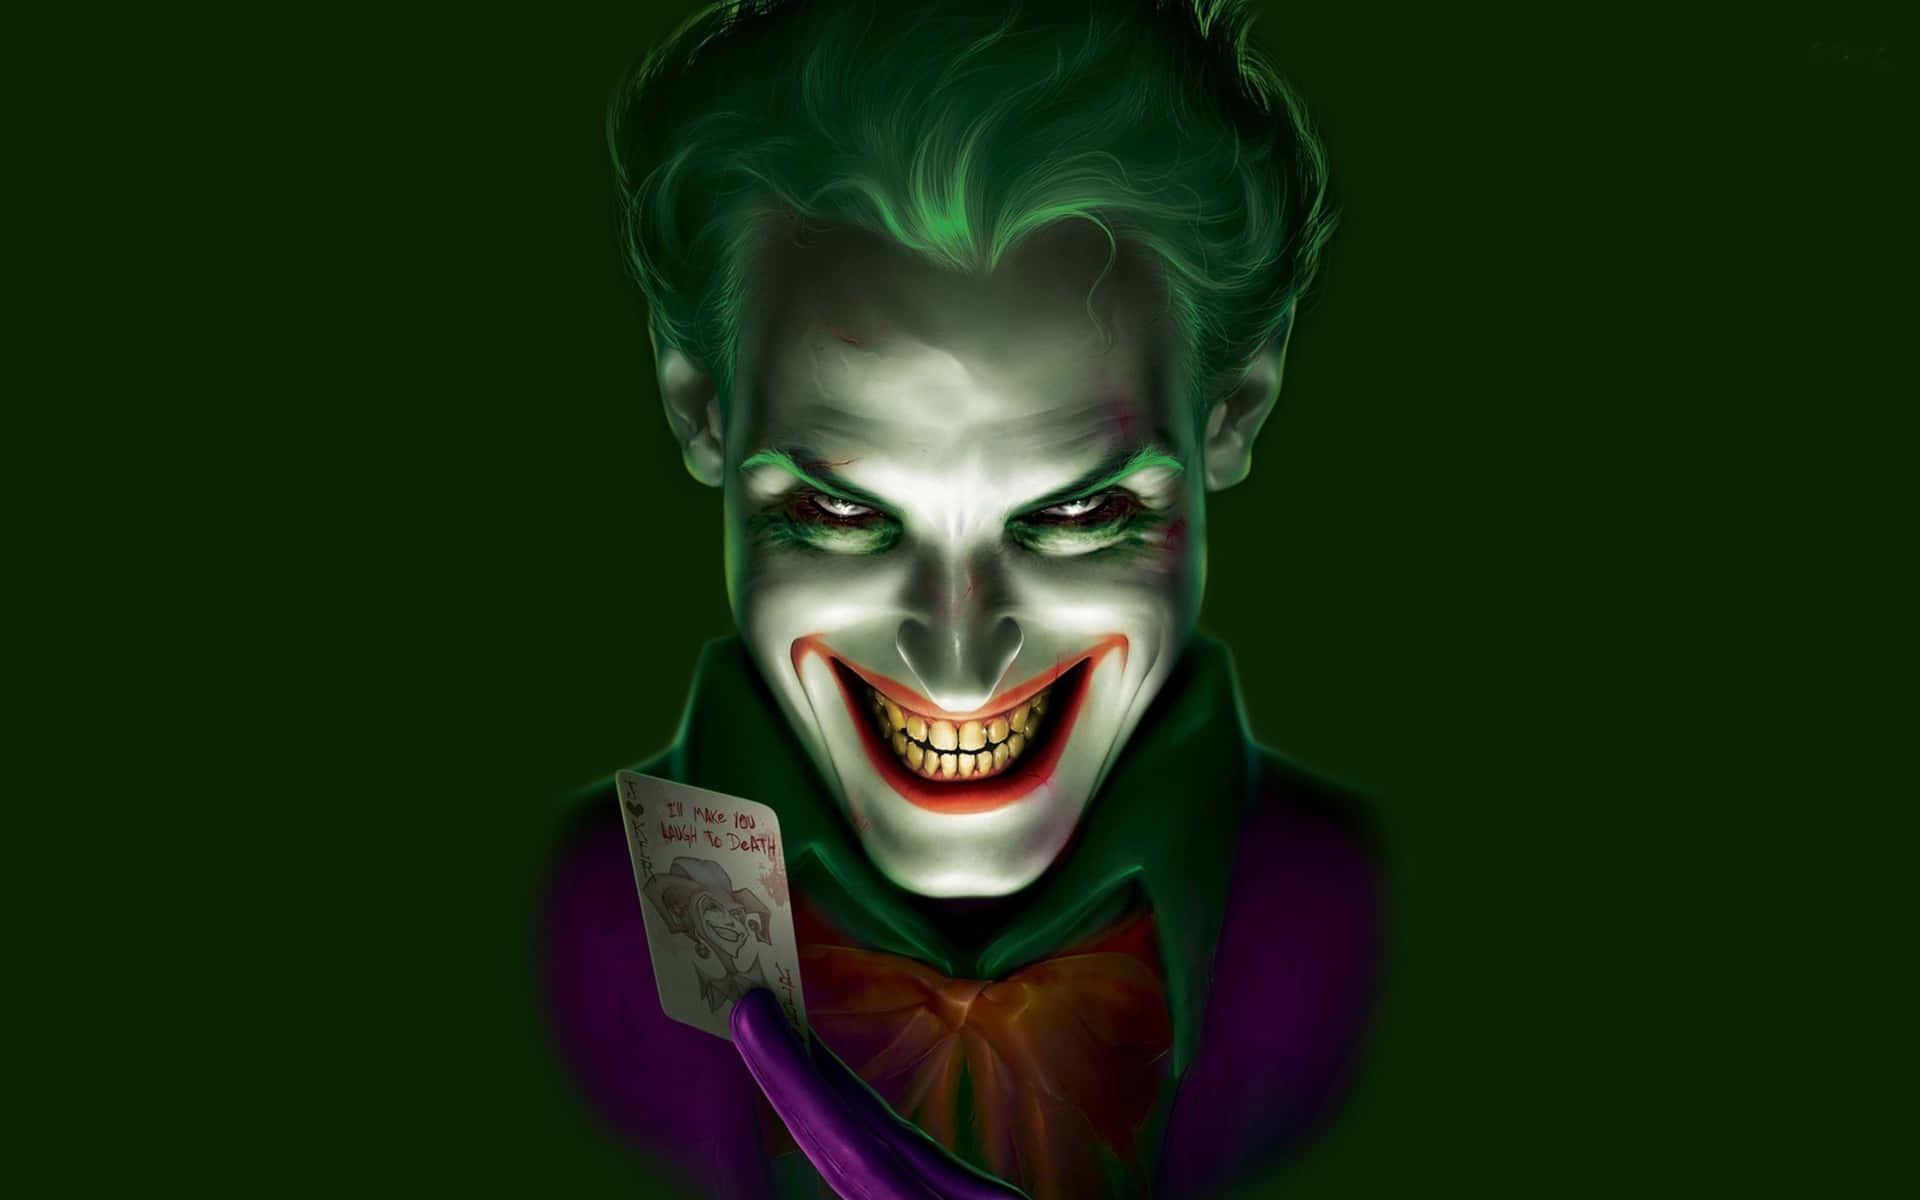 Menacing Figure in Green, The Dangerous Joker Wallpaper